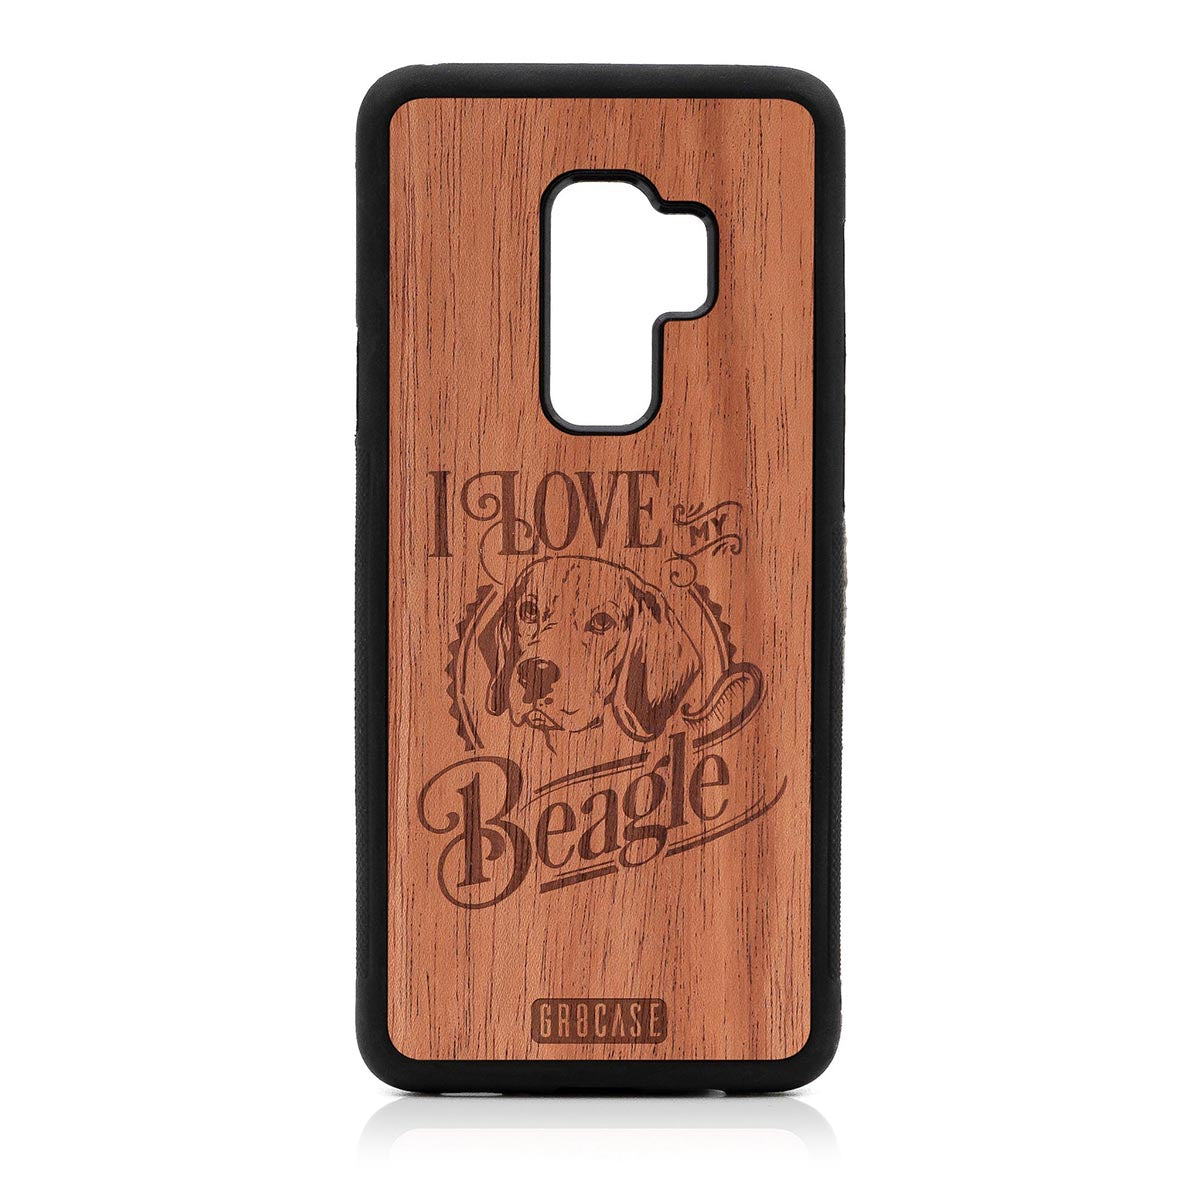 I Love My Beagle Design Wood Case Samsung Galaxy S9 Plus by GR8CASE